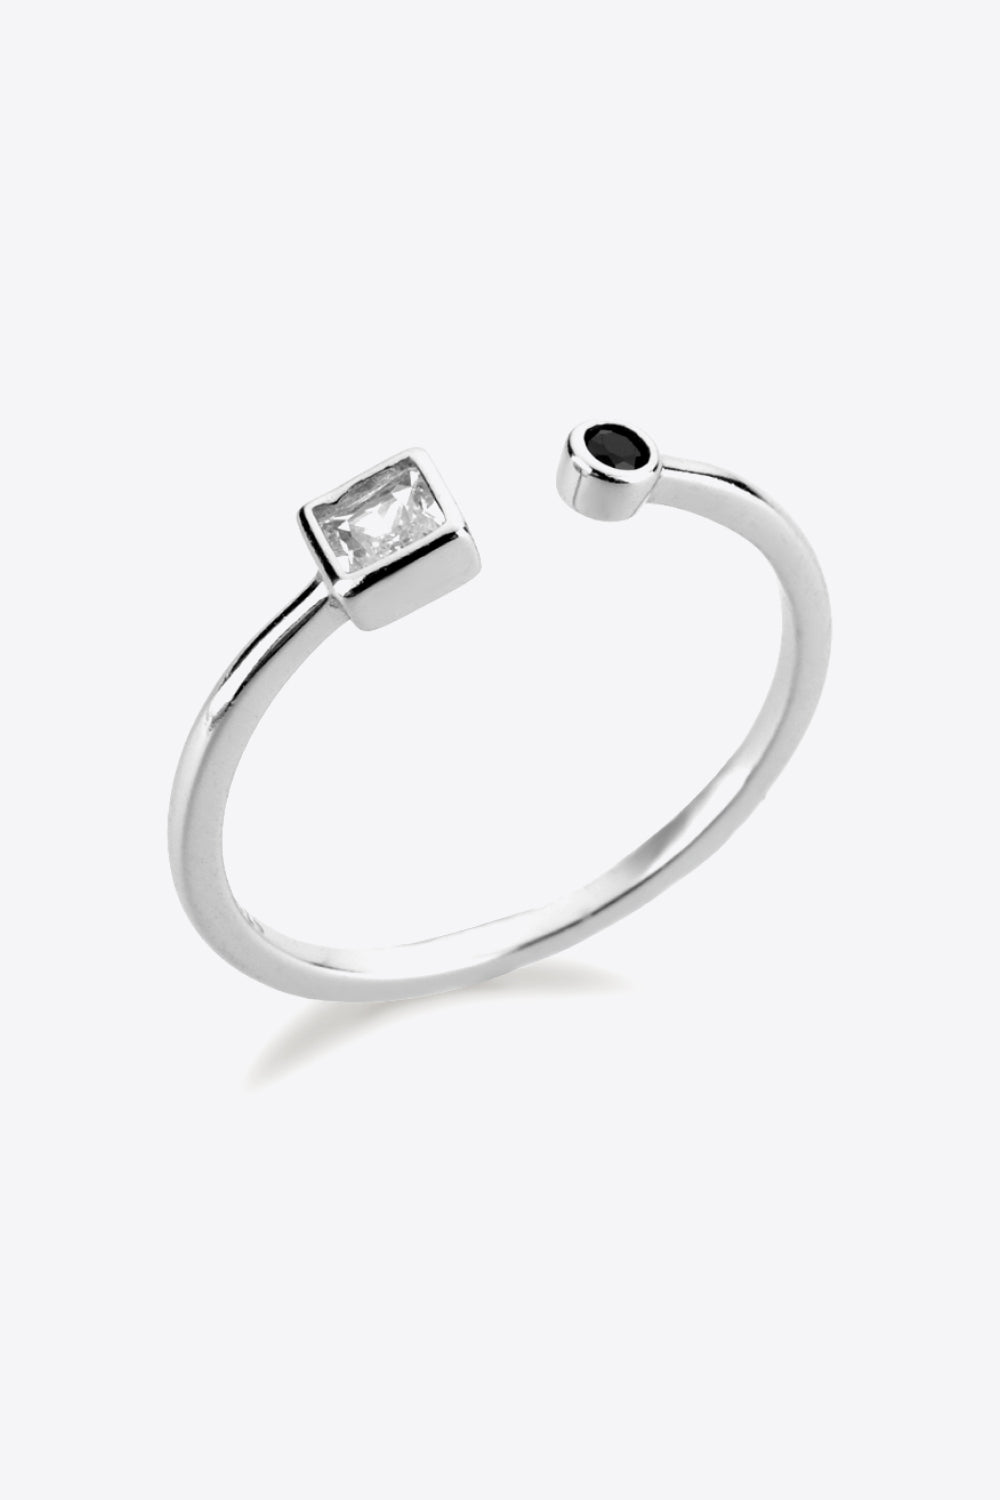 White Smoke Zircon 925 Sterling Silver Open Ring Sentient Beauty Fashions jewelry